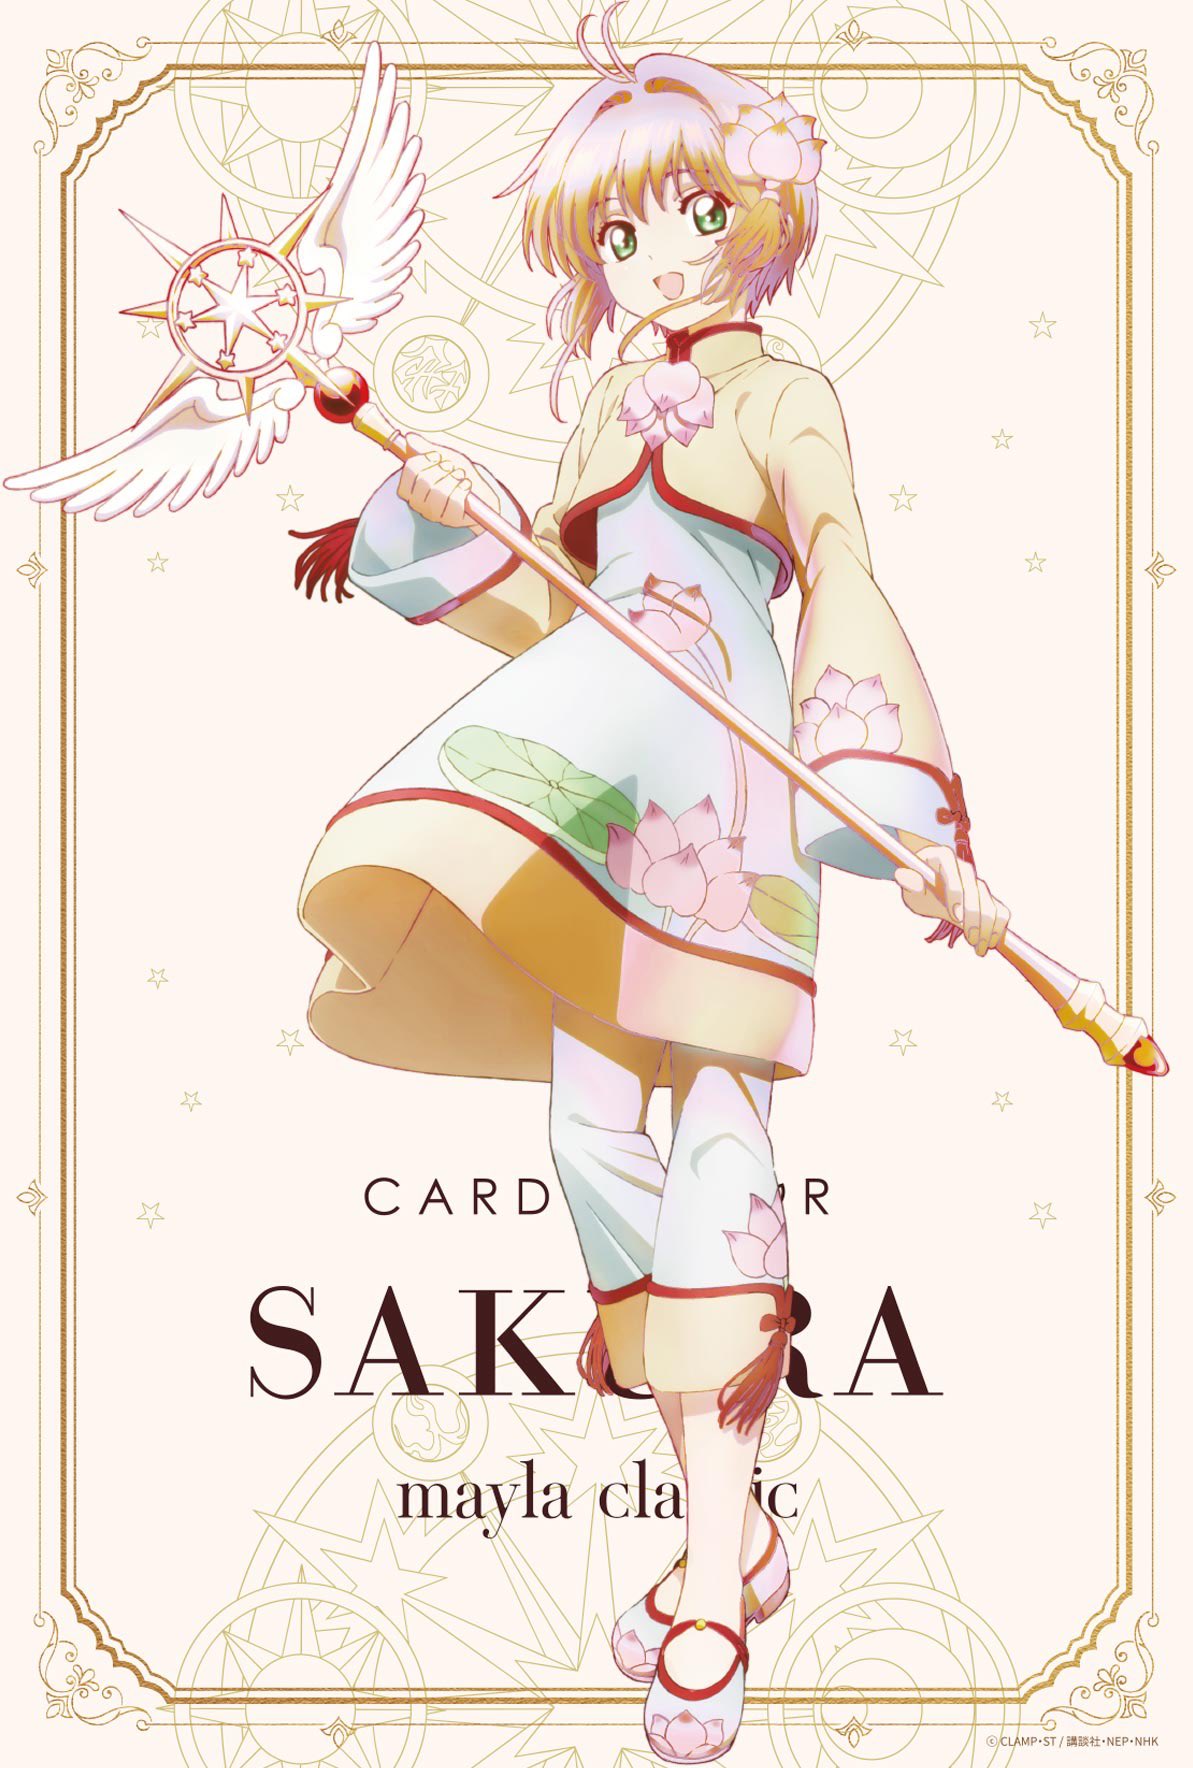 Second collaboration Cardcaptor Sakura x Mayla Classic "Candy Lotus"